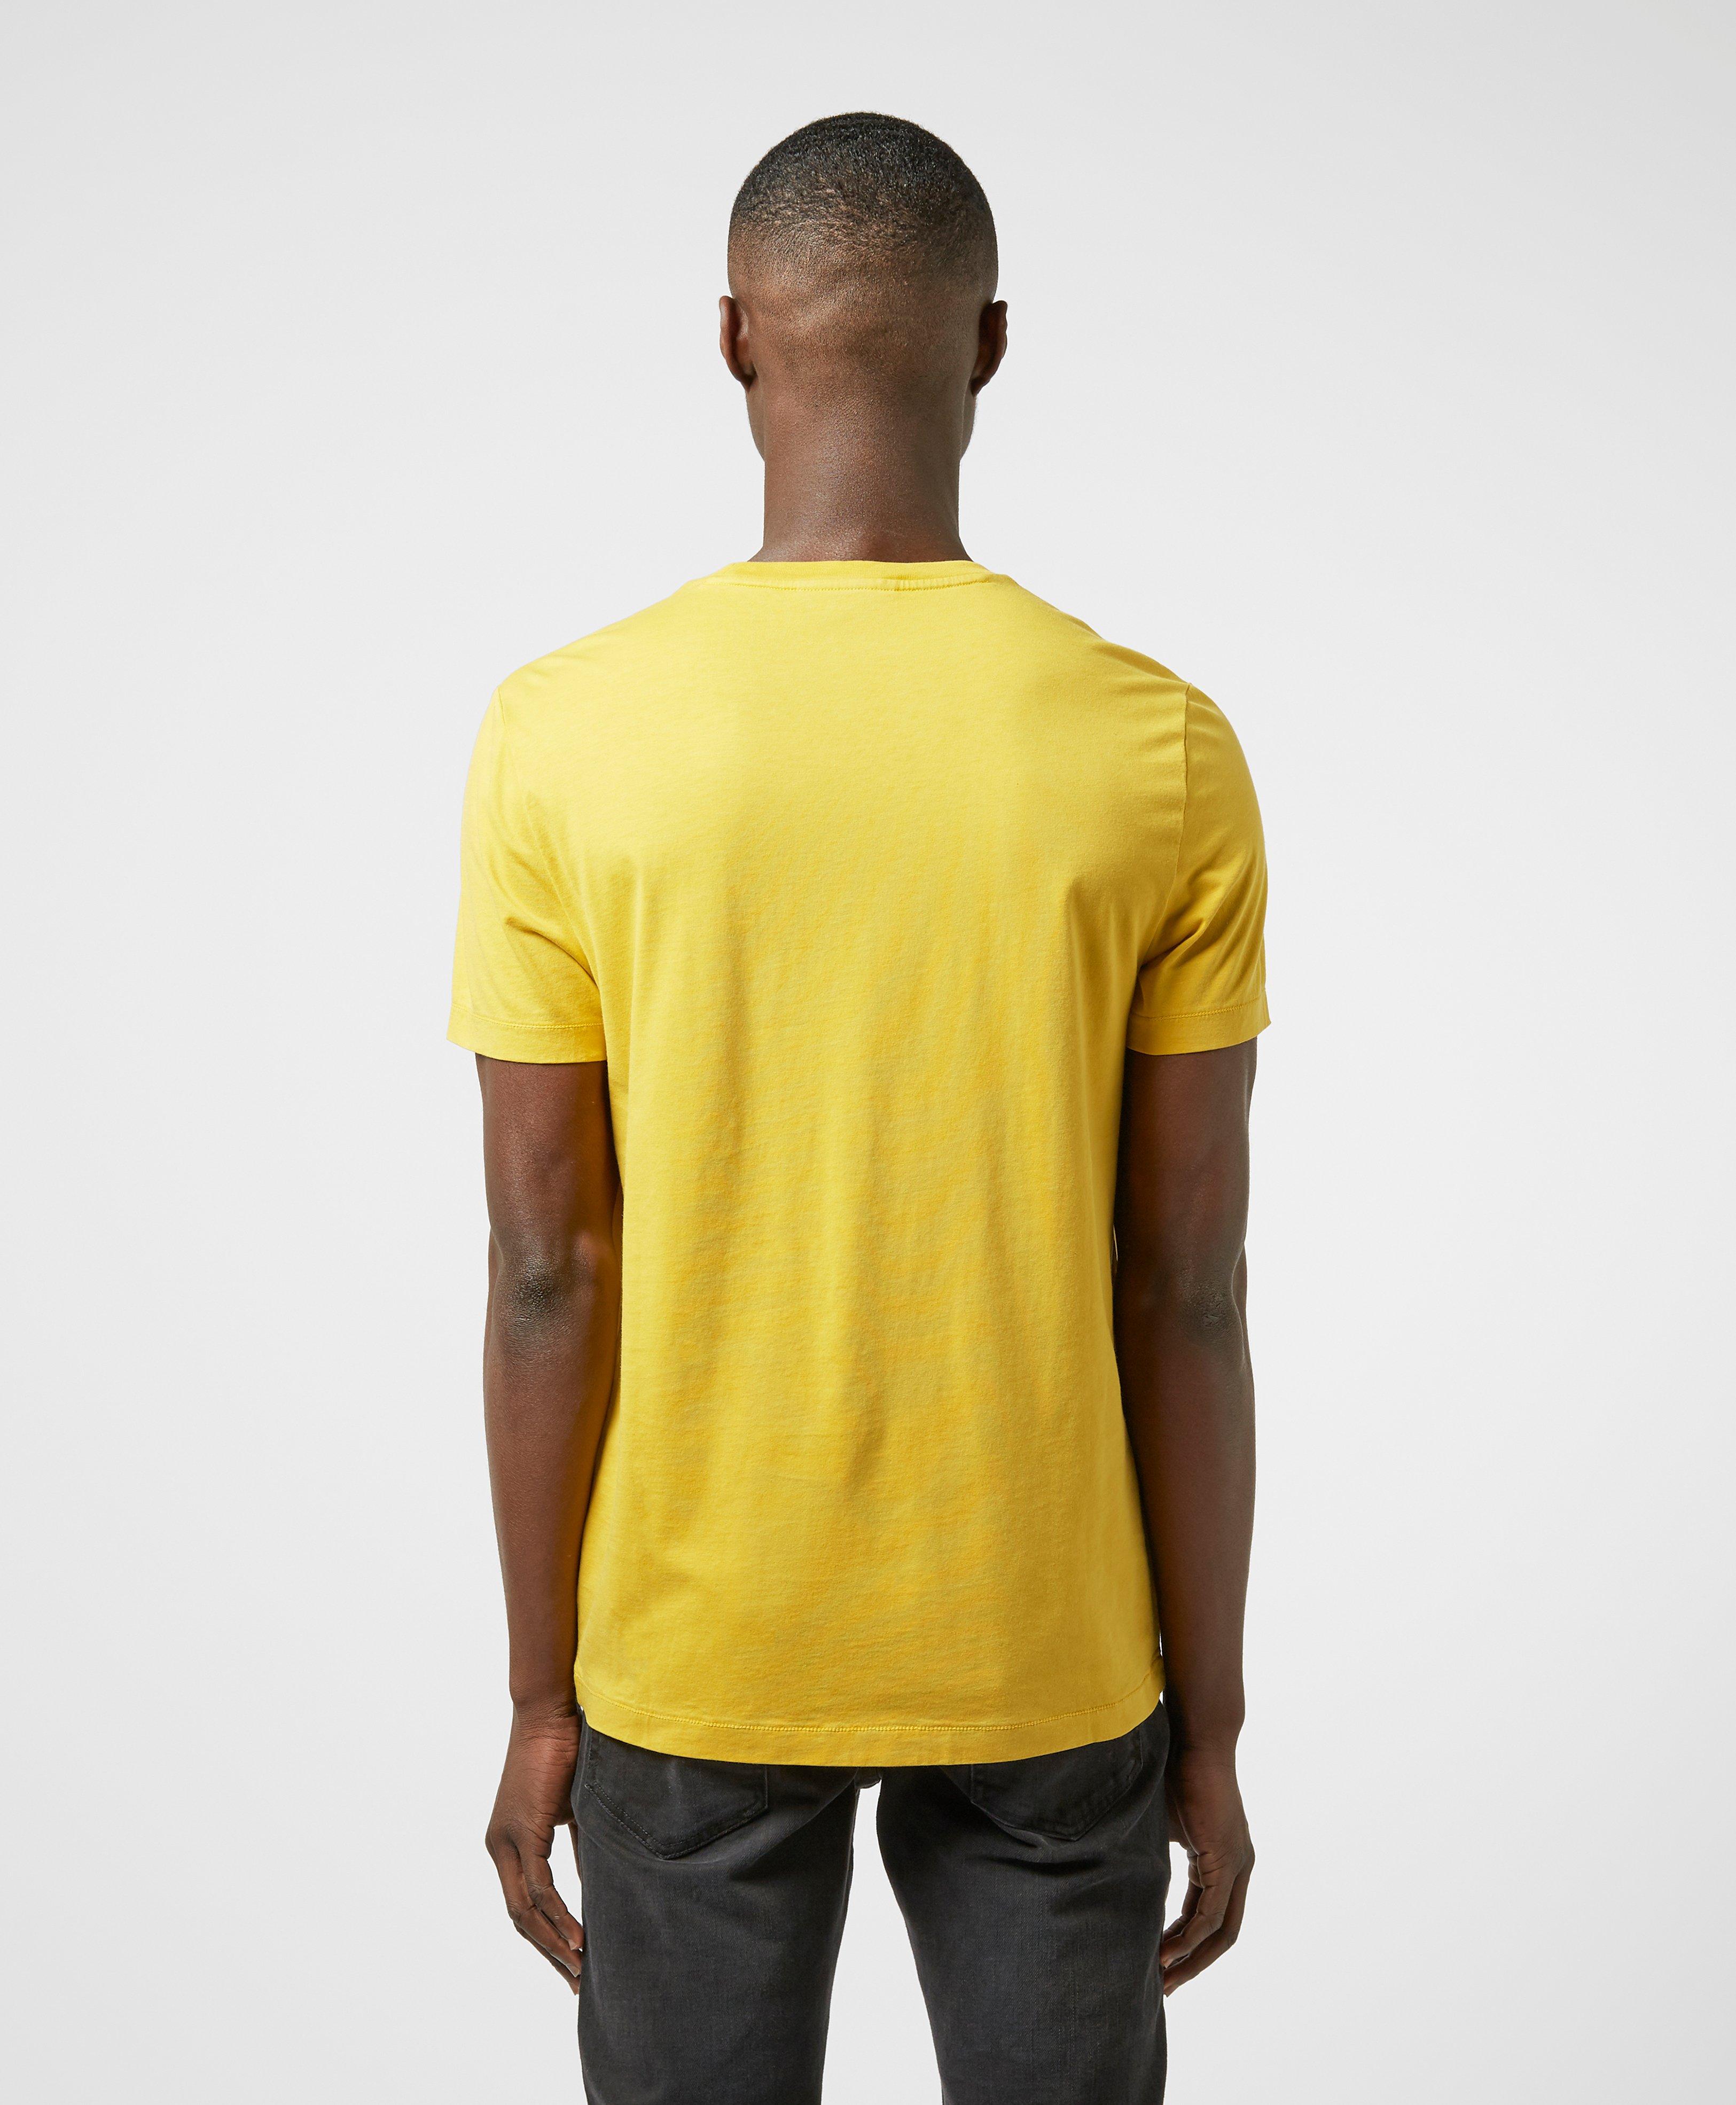 michael kors shirts yellow